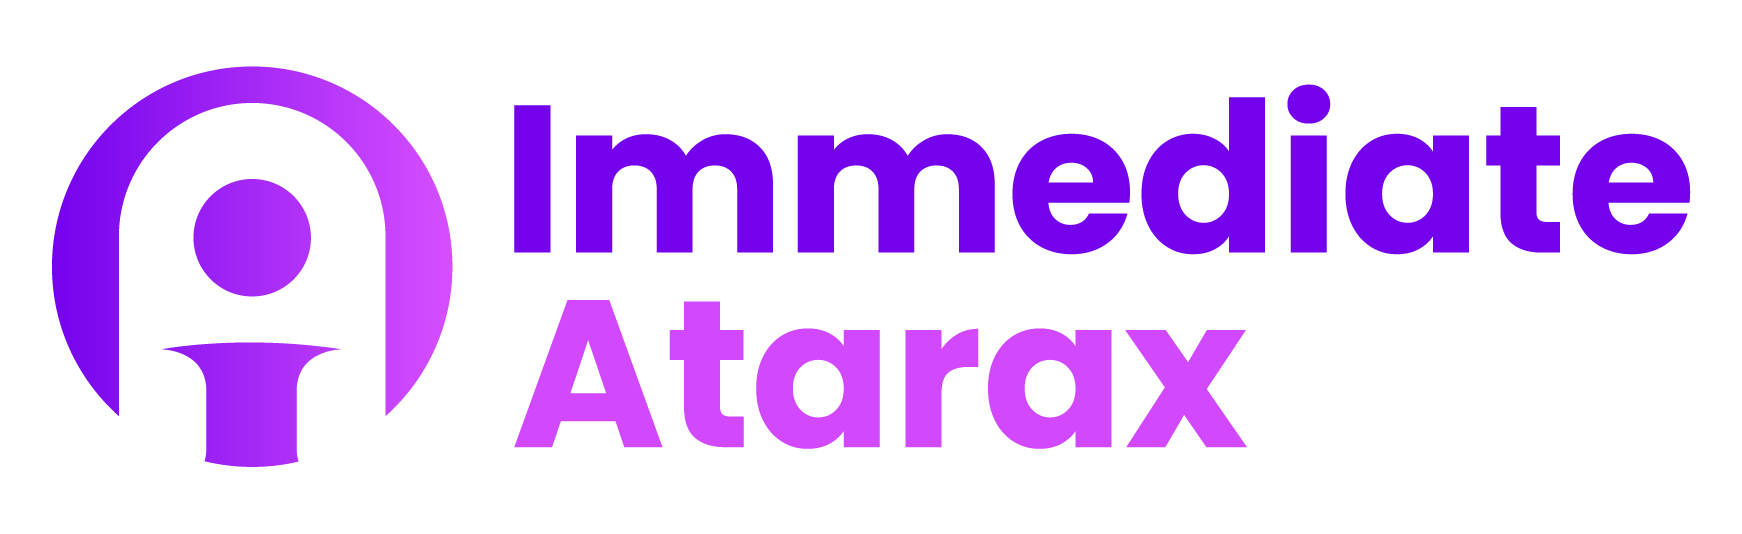 Immediate Atarax - Tentang Tim Immediate Atarax